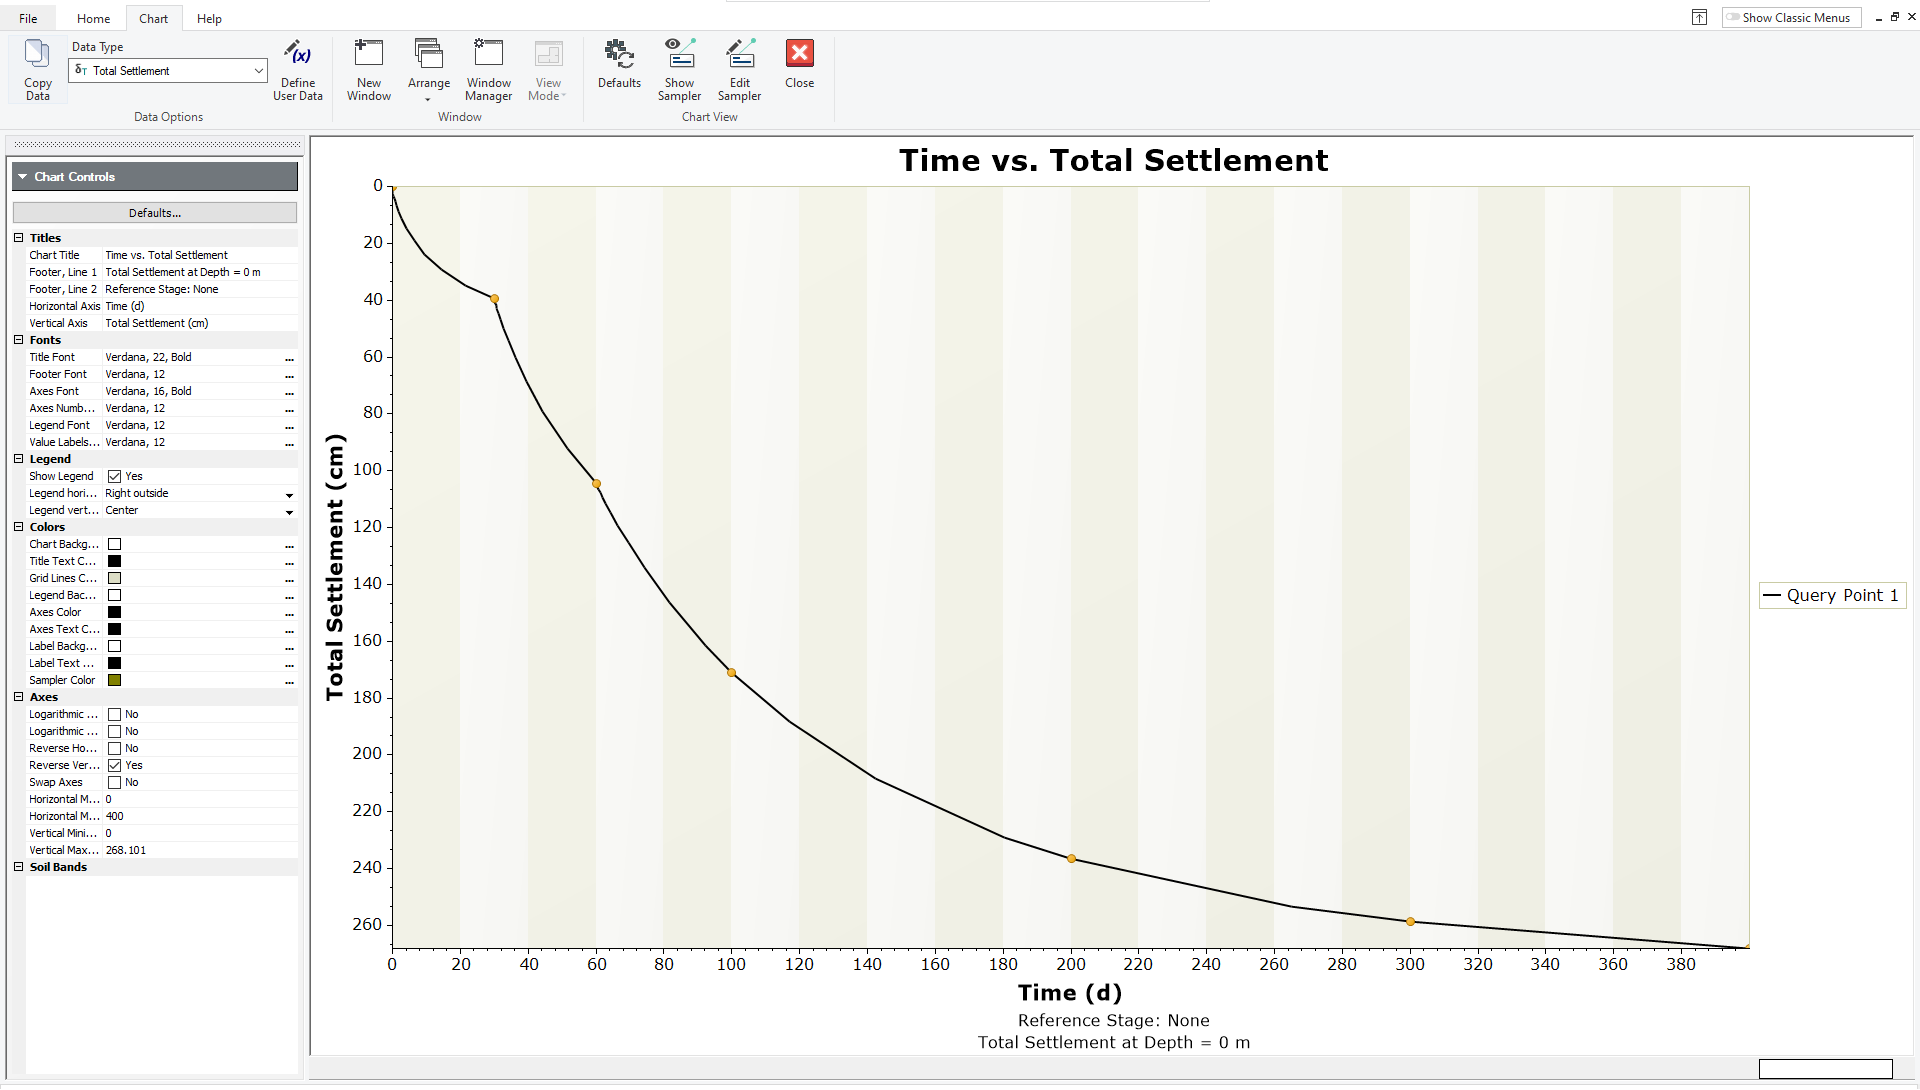 TIme versus Total Settlement Graph